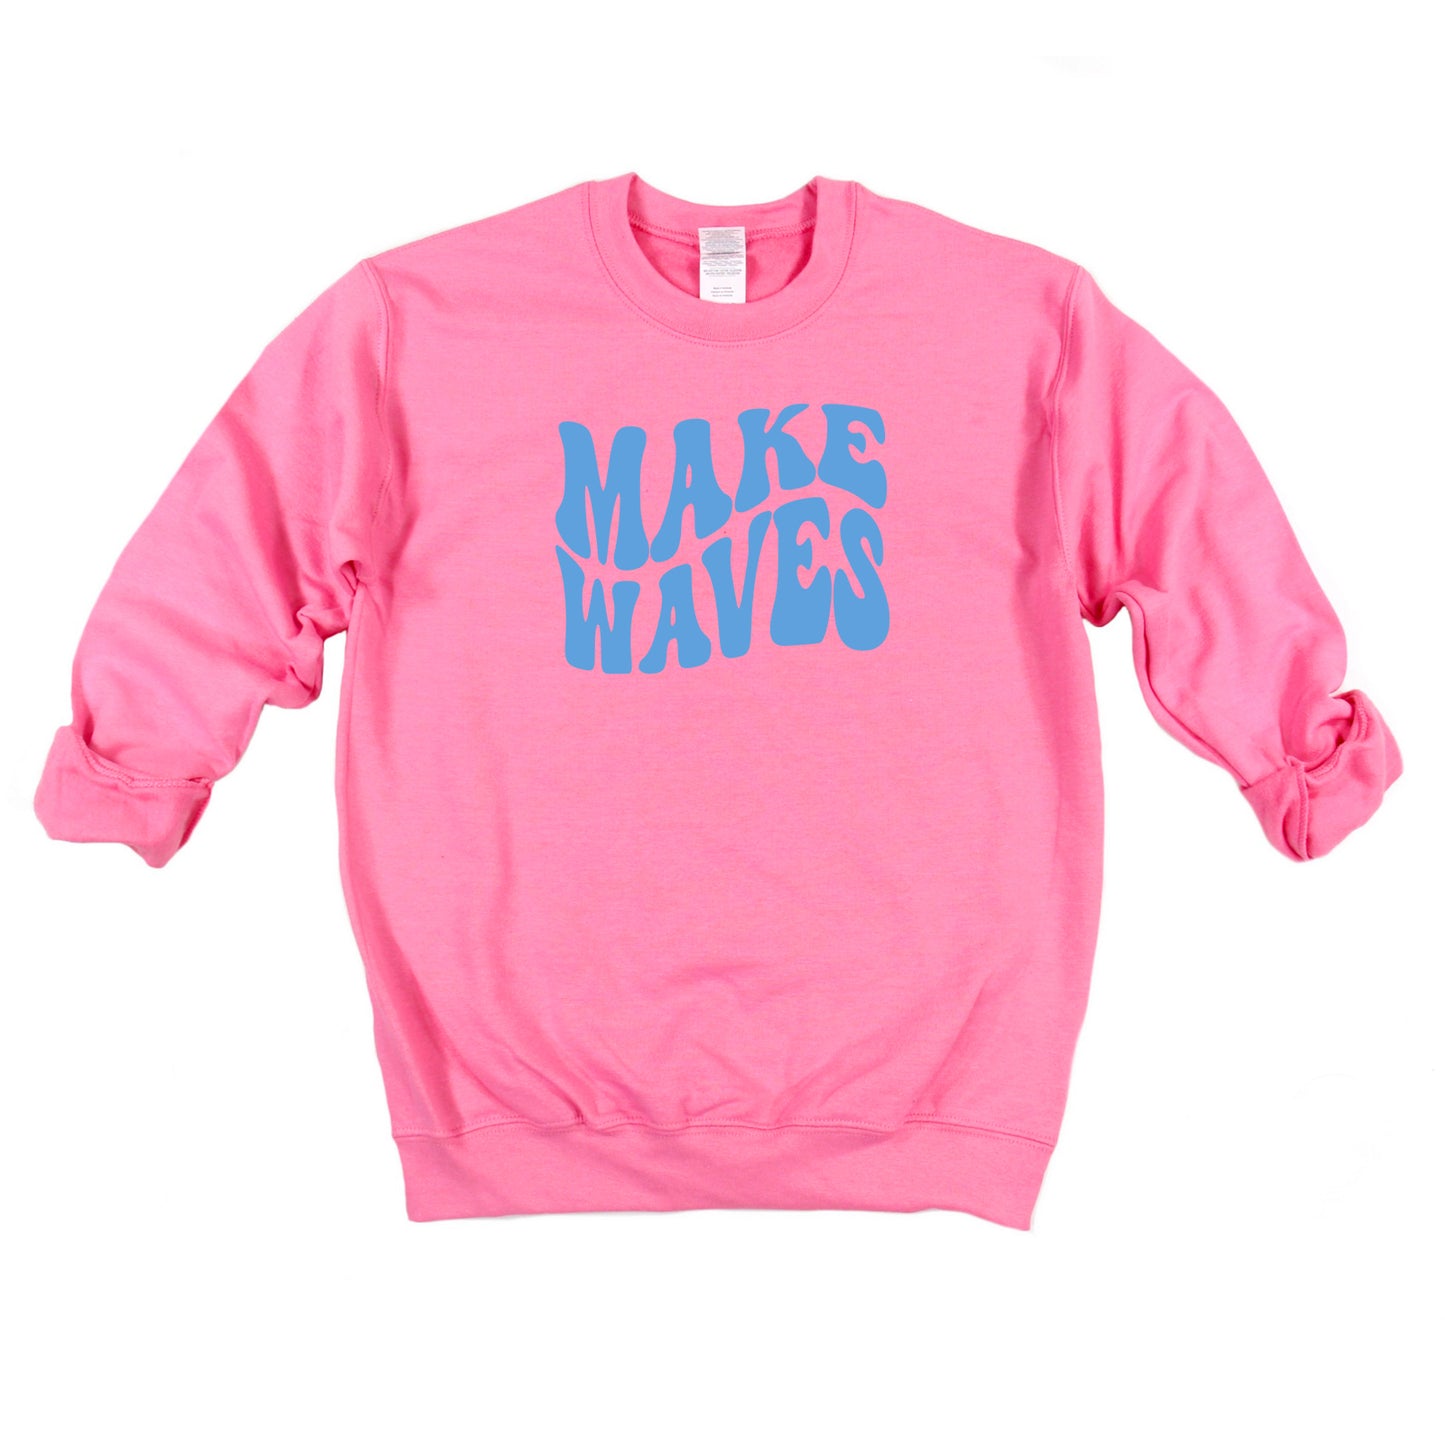 Make Waves | Youth Sweatshirt